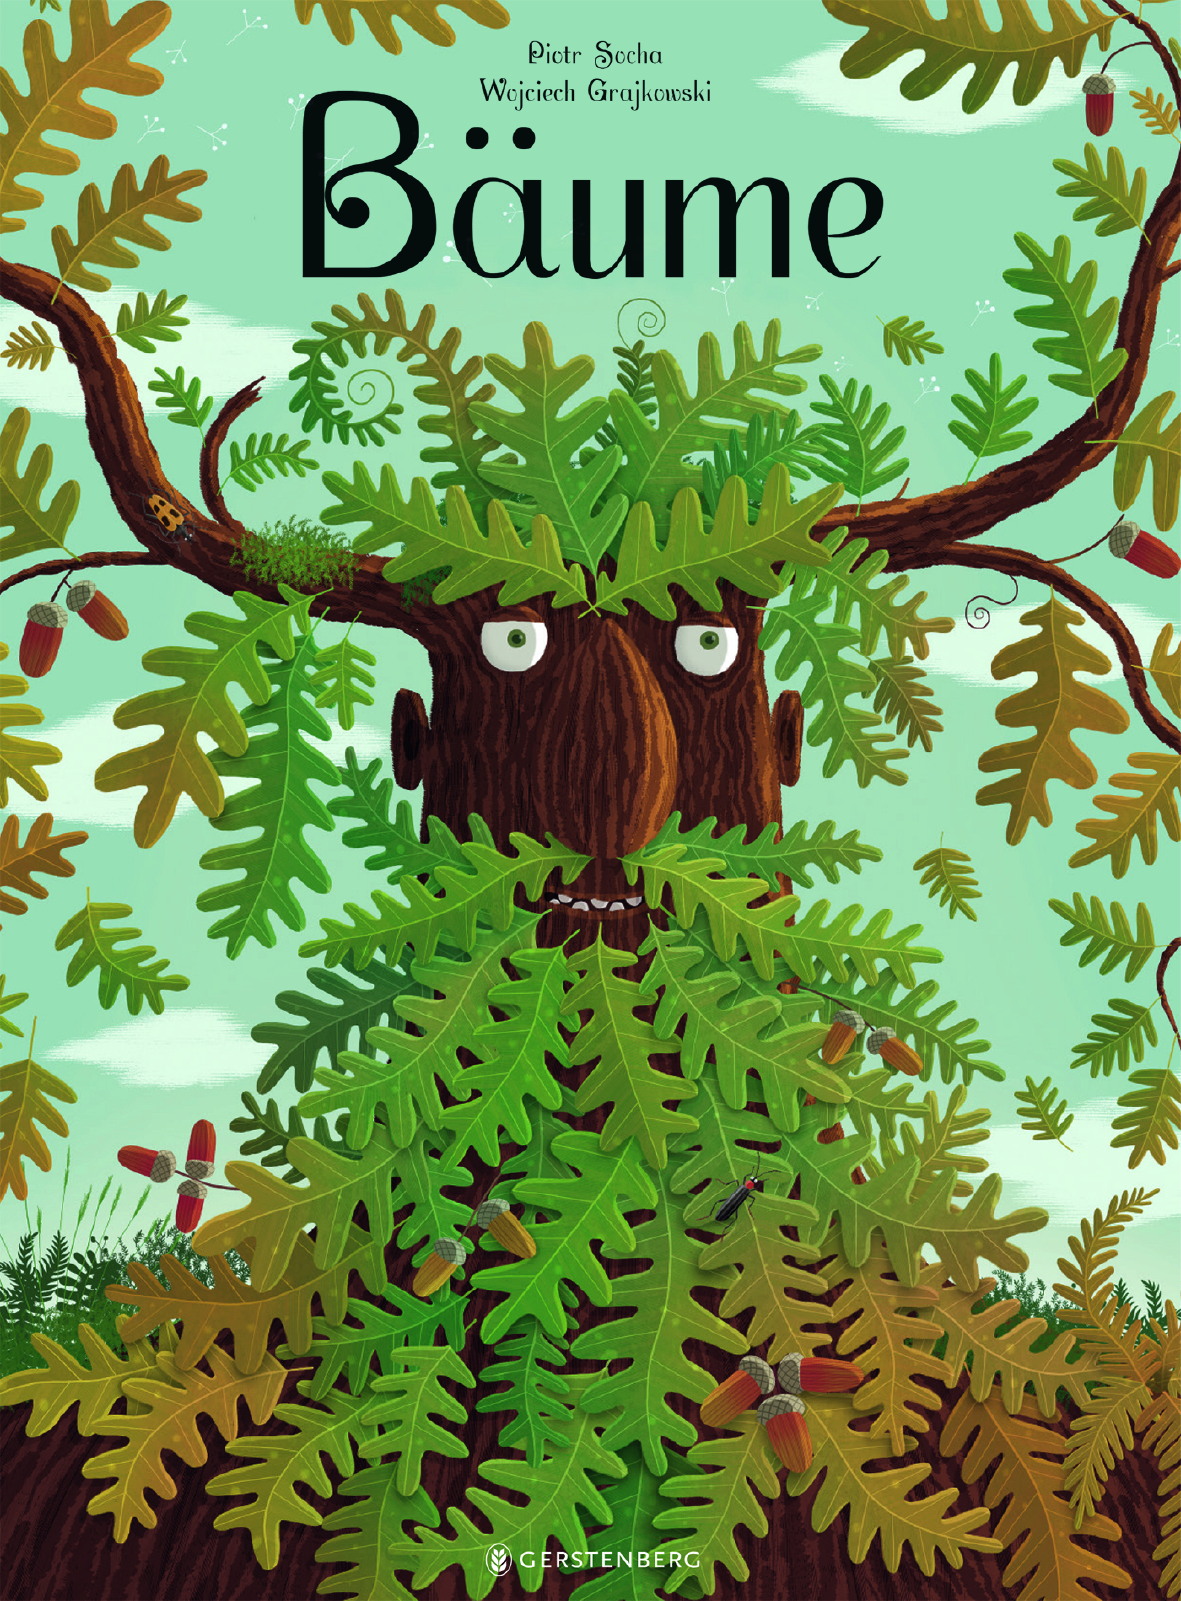 Bäume Book Cover